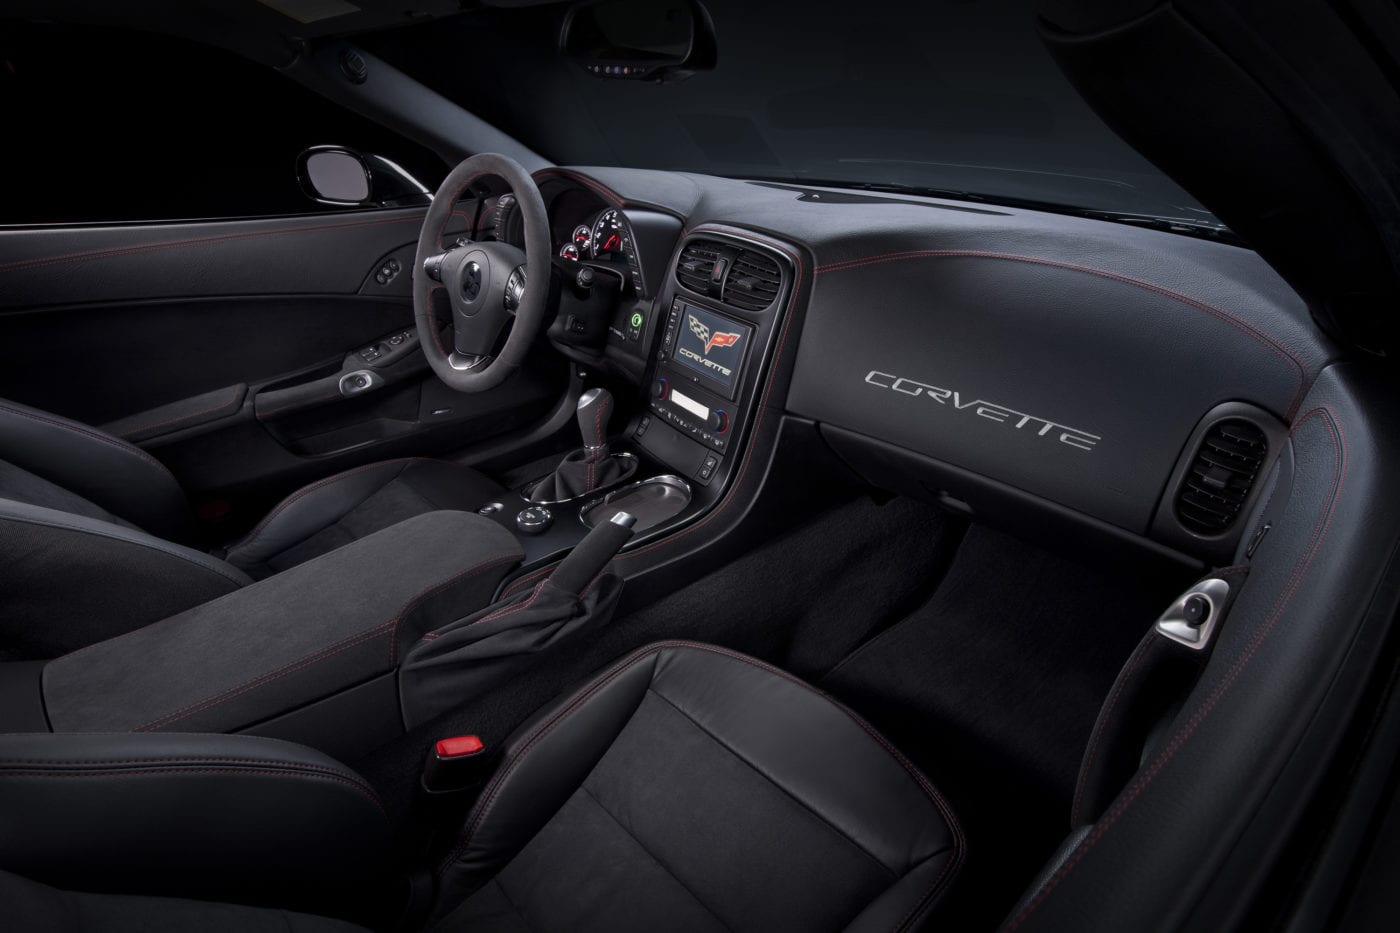 The C6 Corvette Z06 has a spacious and comfortable interior